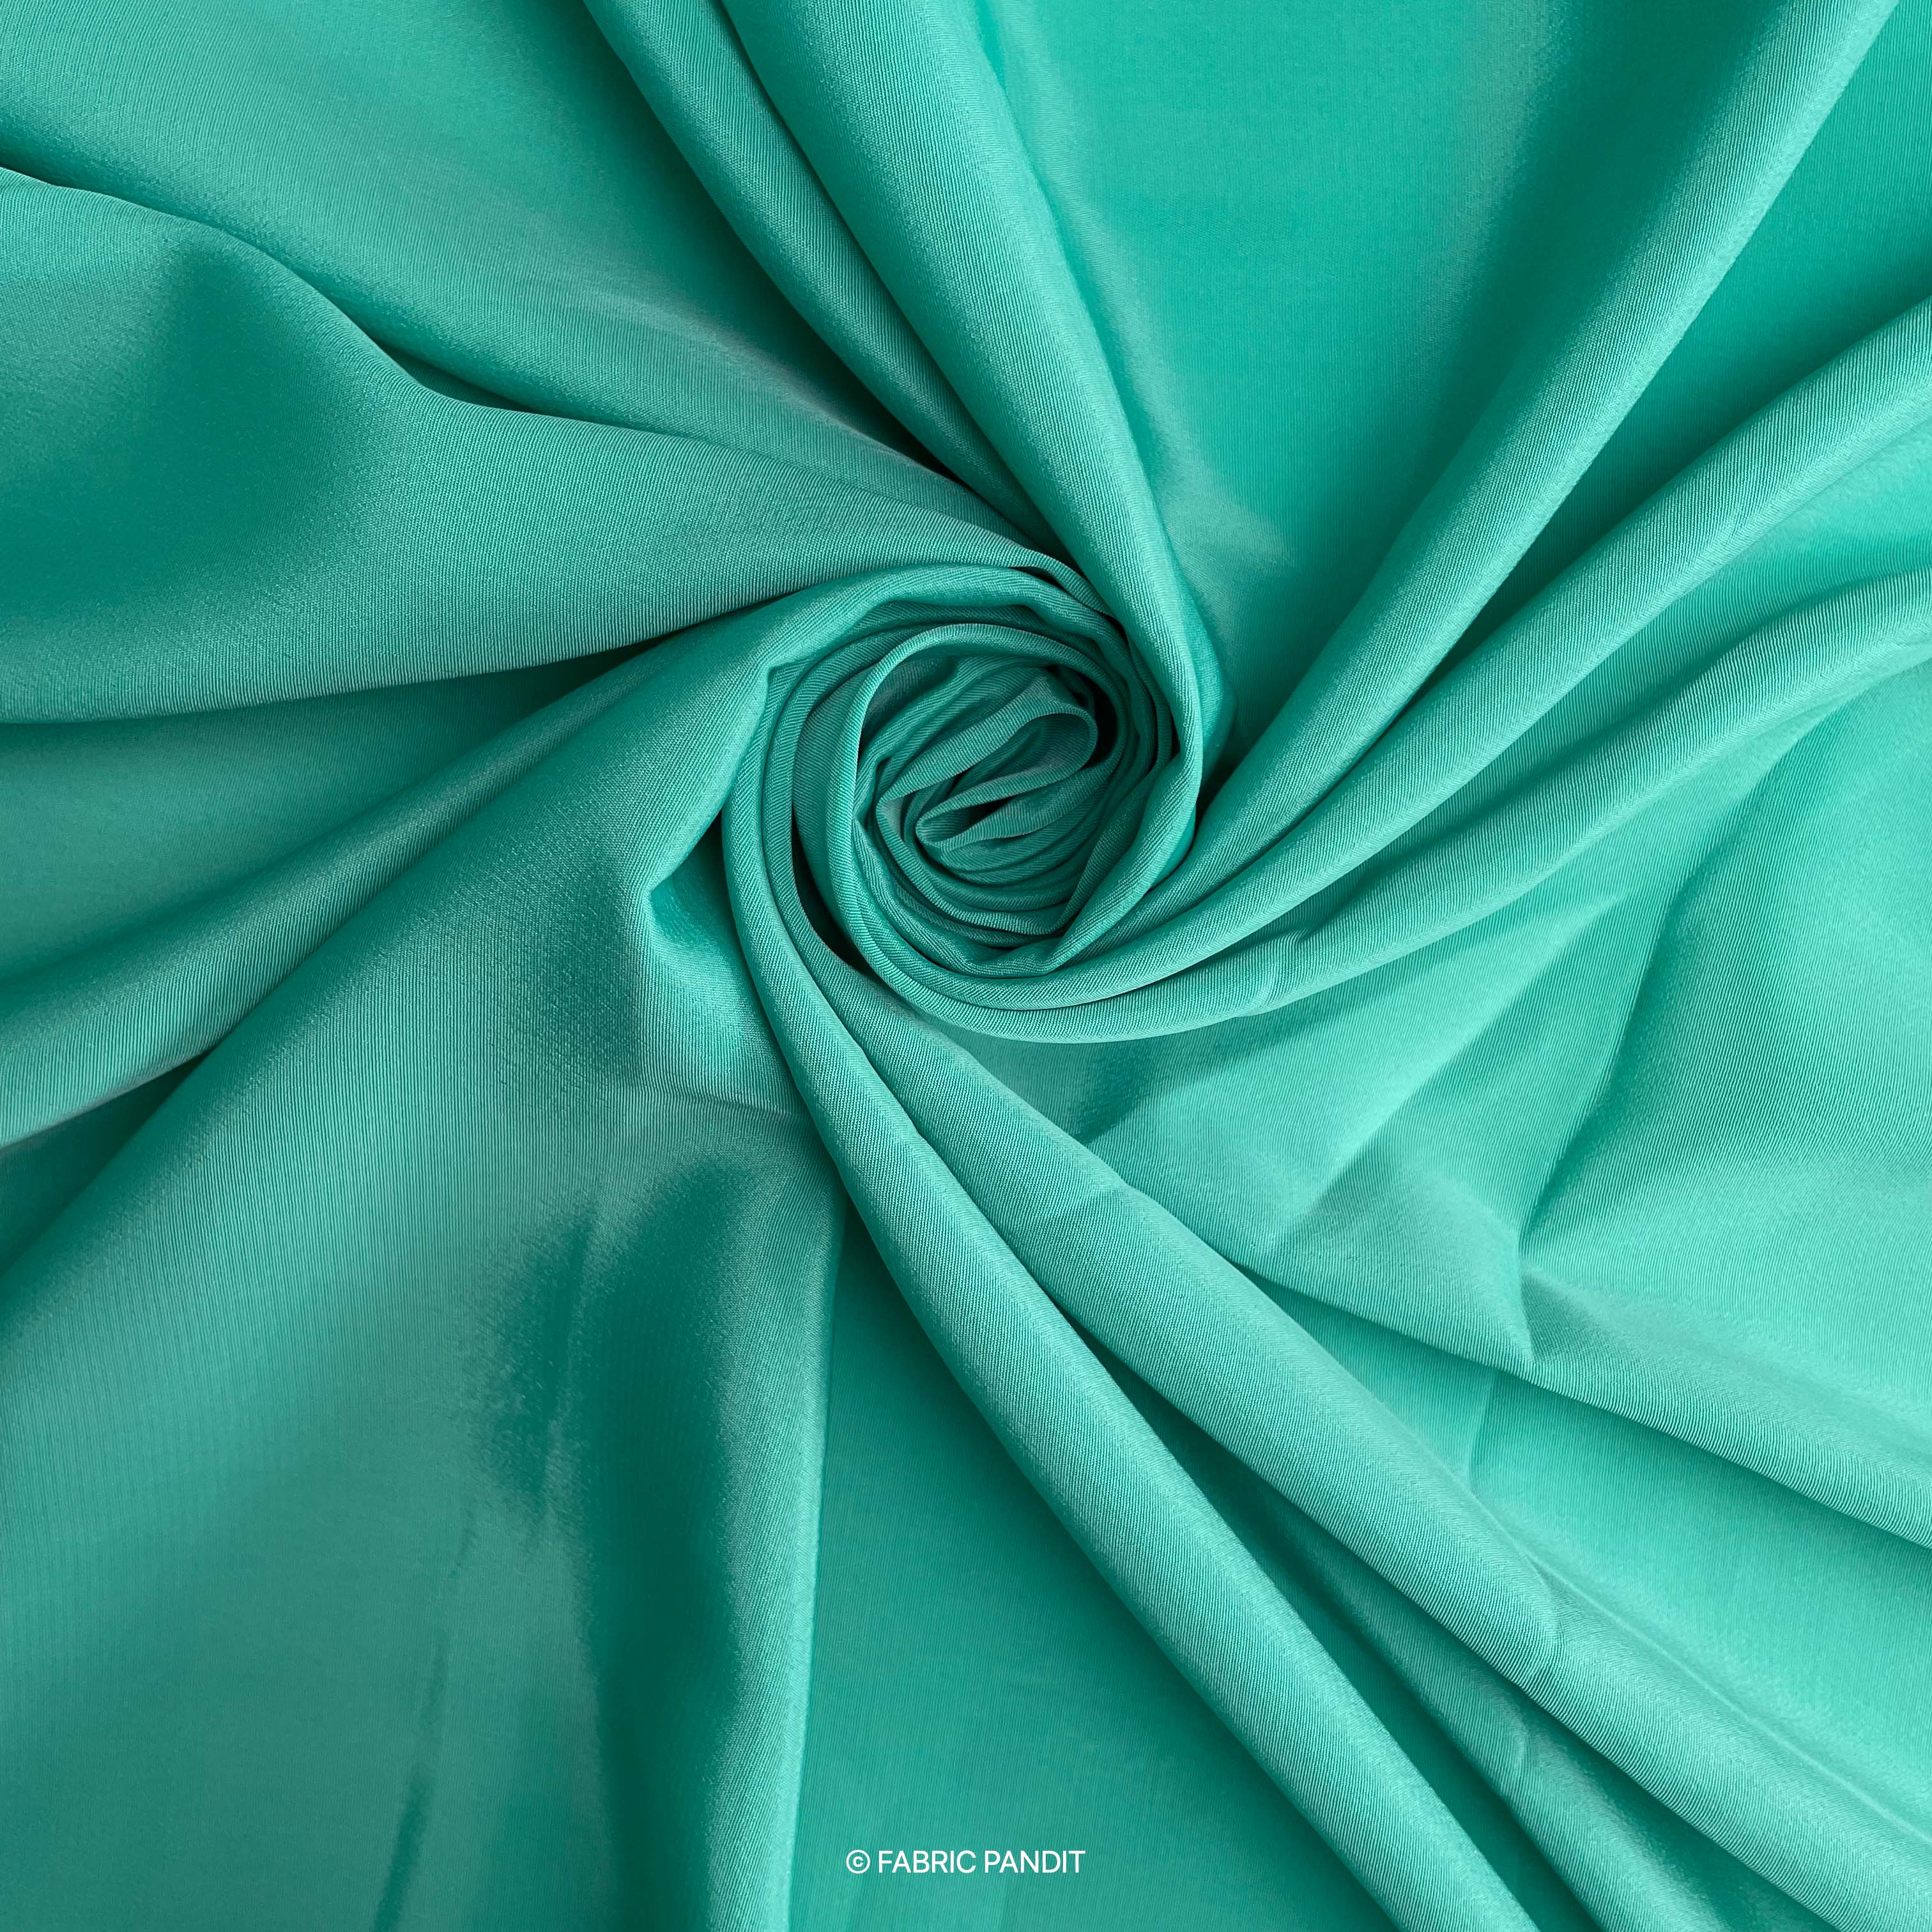 CUT PIECE) Sea Green Color Premium French Crepe Fabric (Width 44